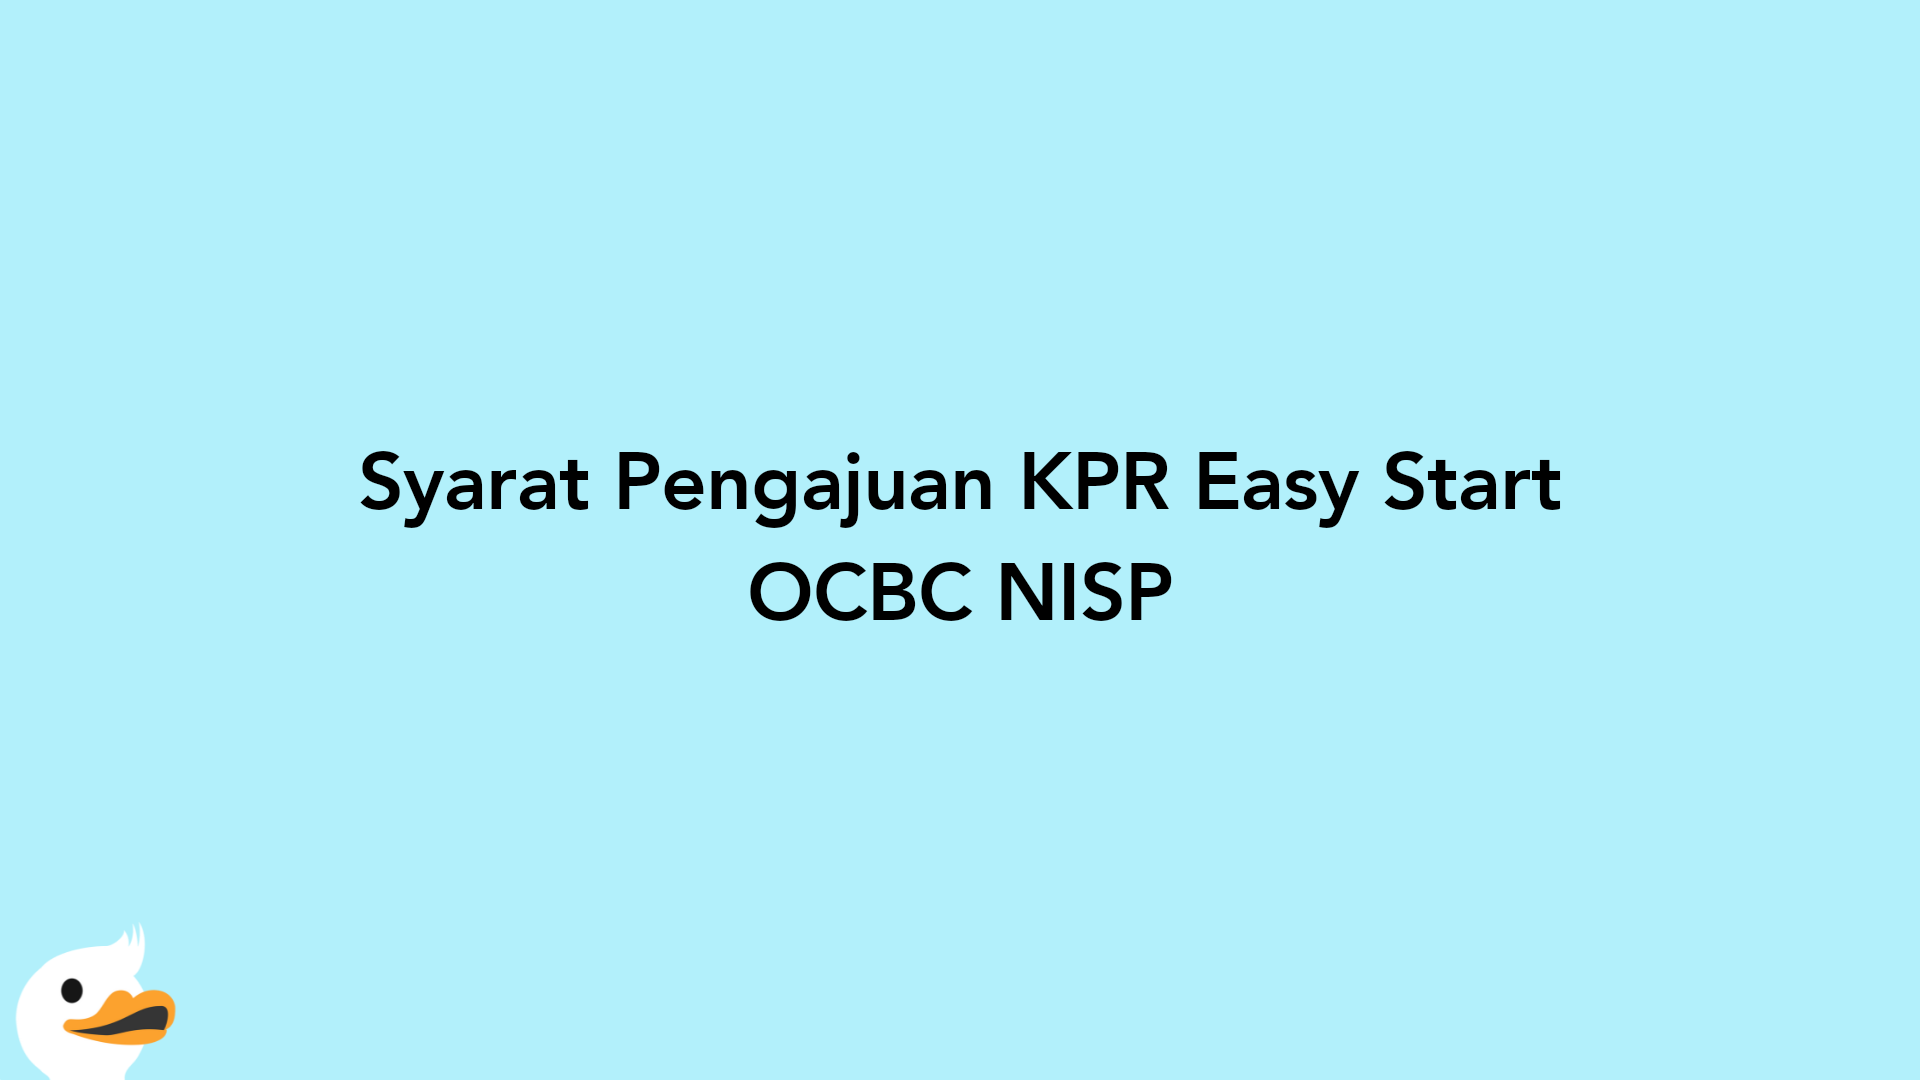 Syarat Pengajuan KPR Easy Start OCBC NISP